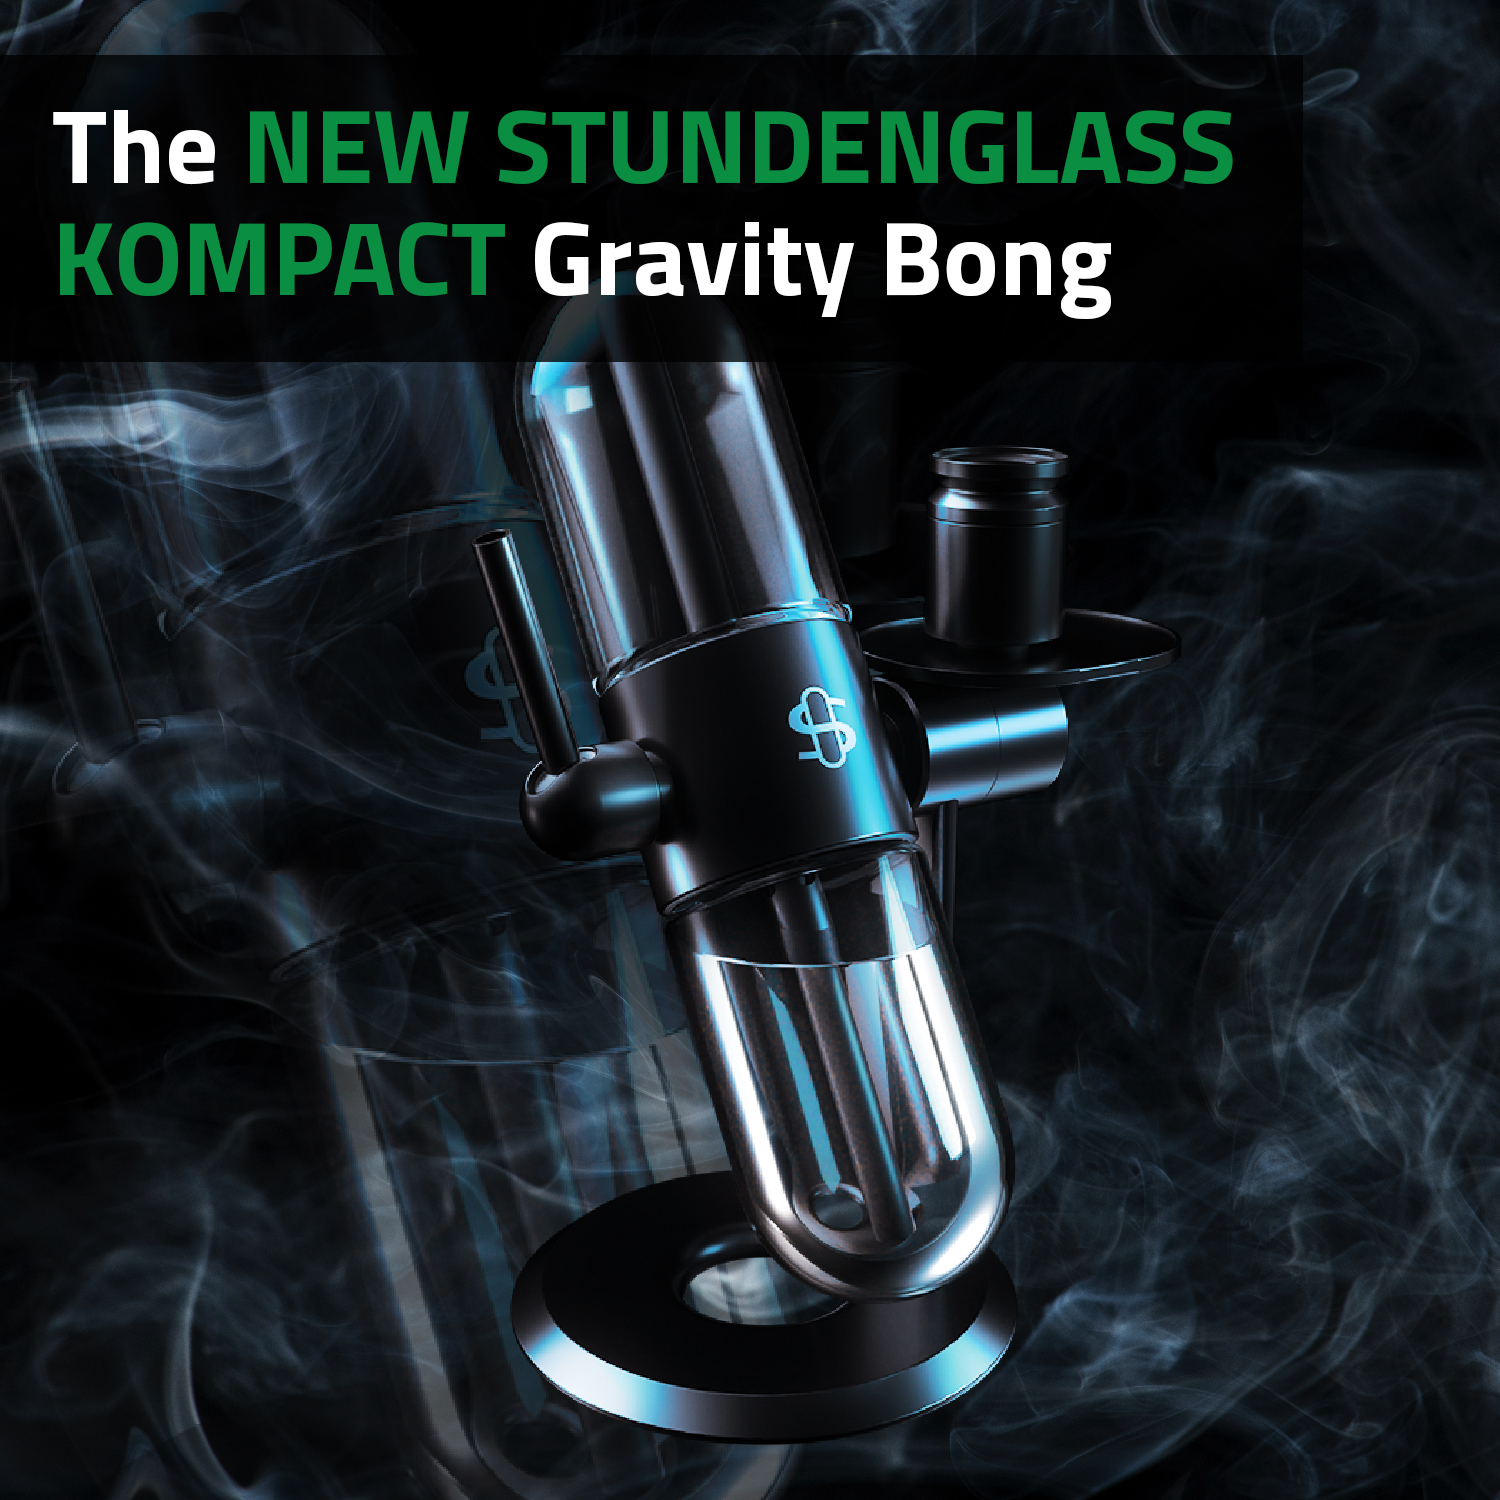 The New Stündenglass Kompact Gravity Bong